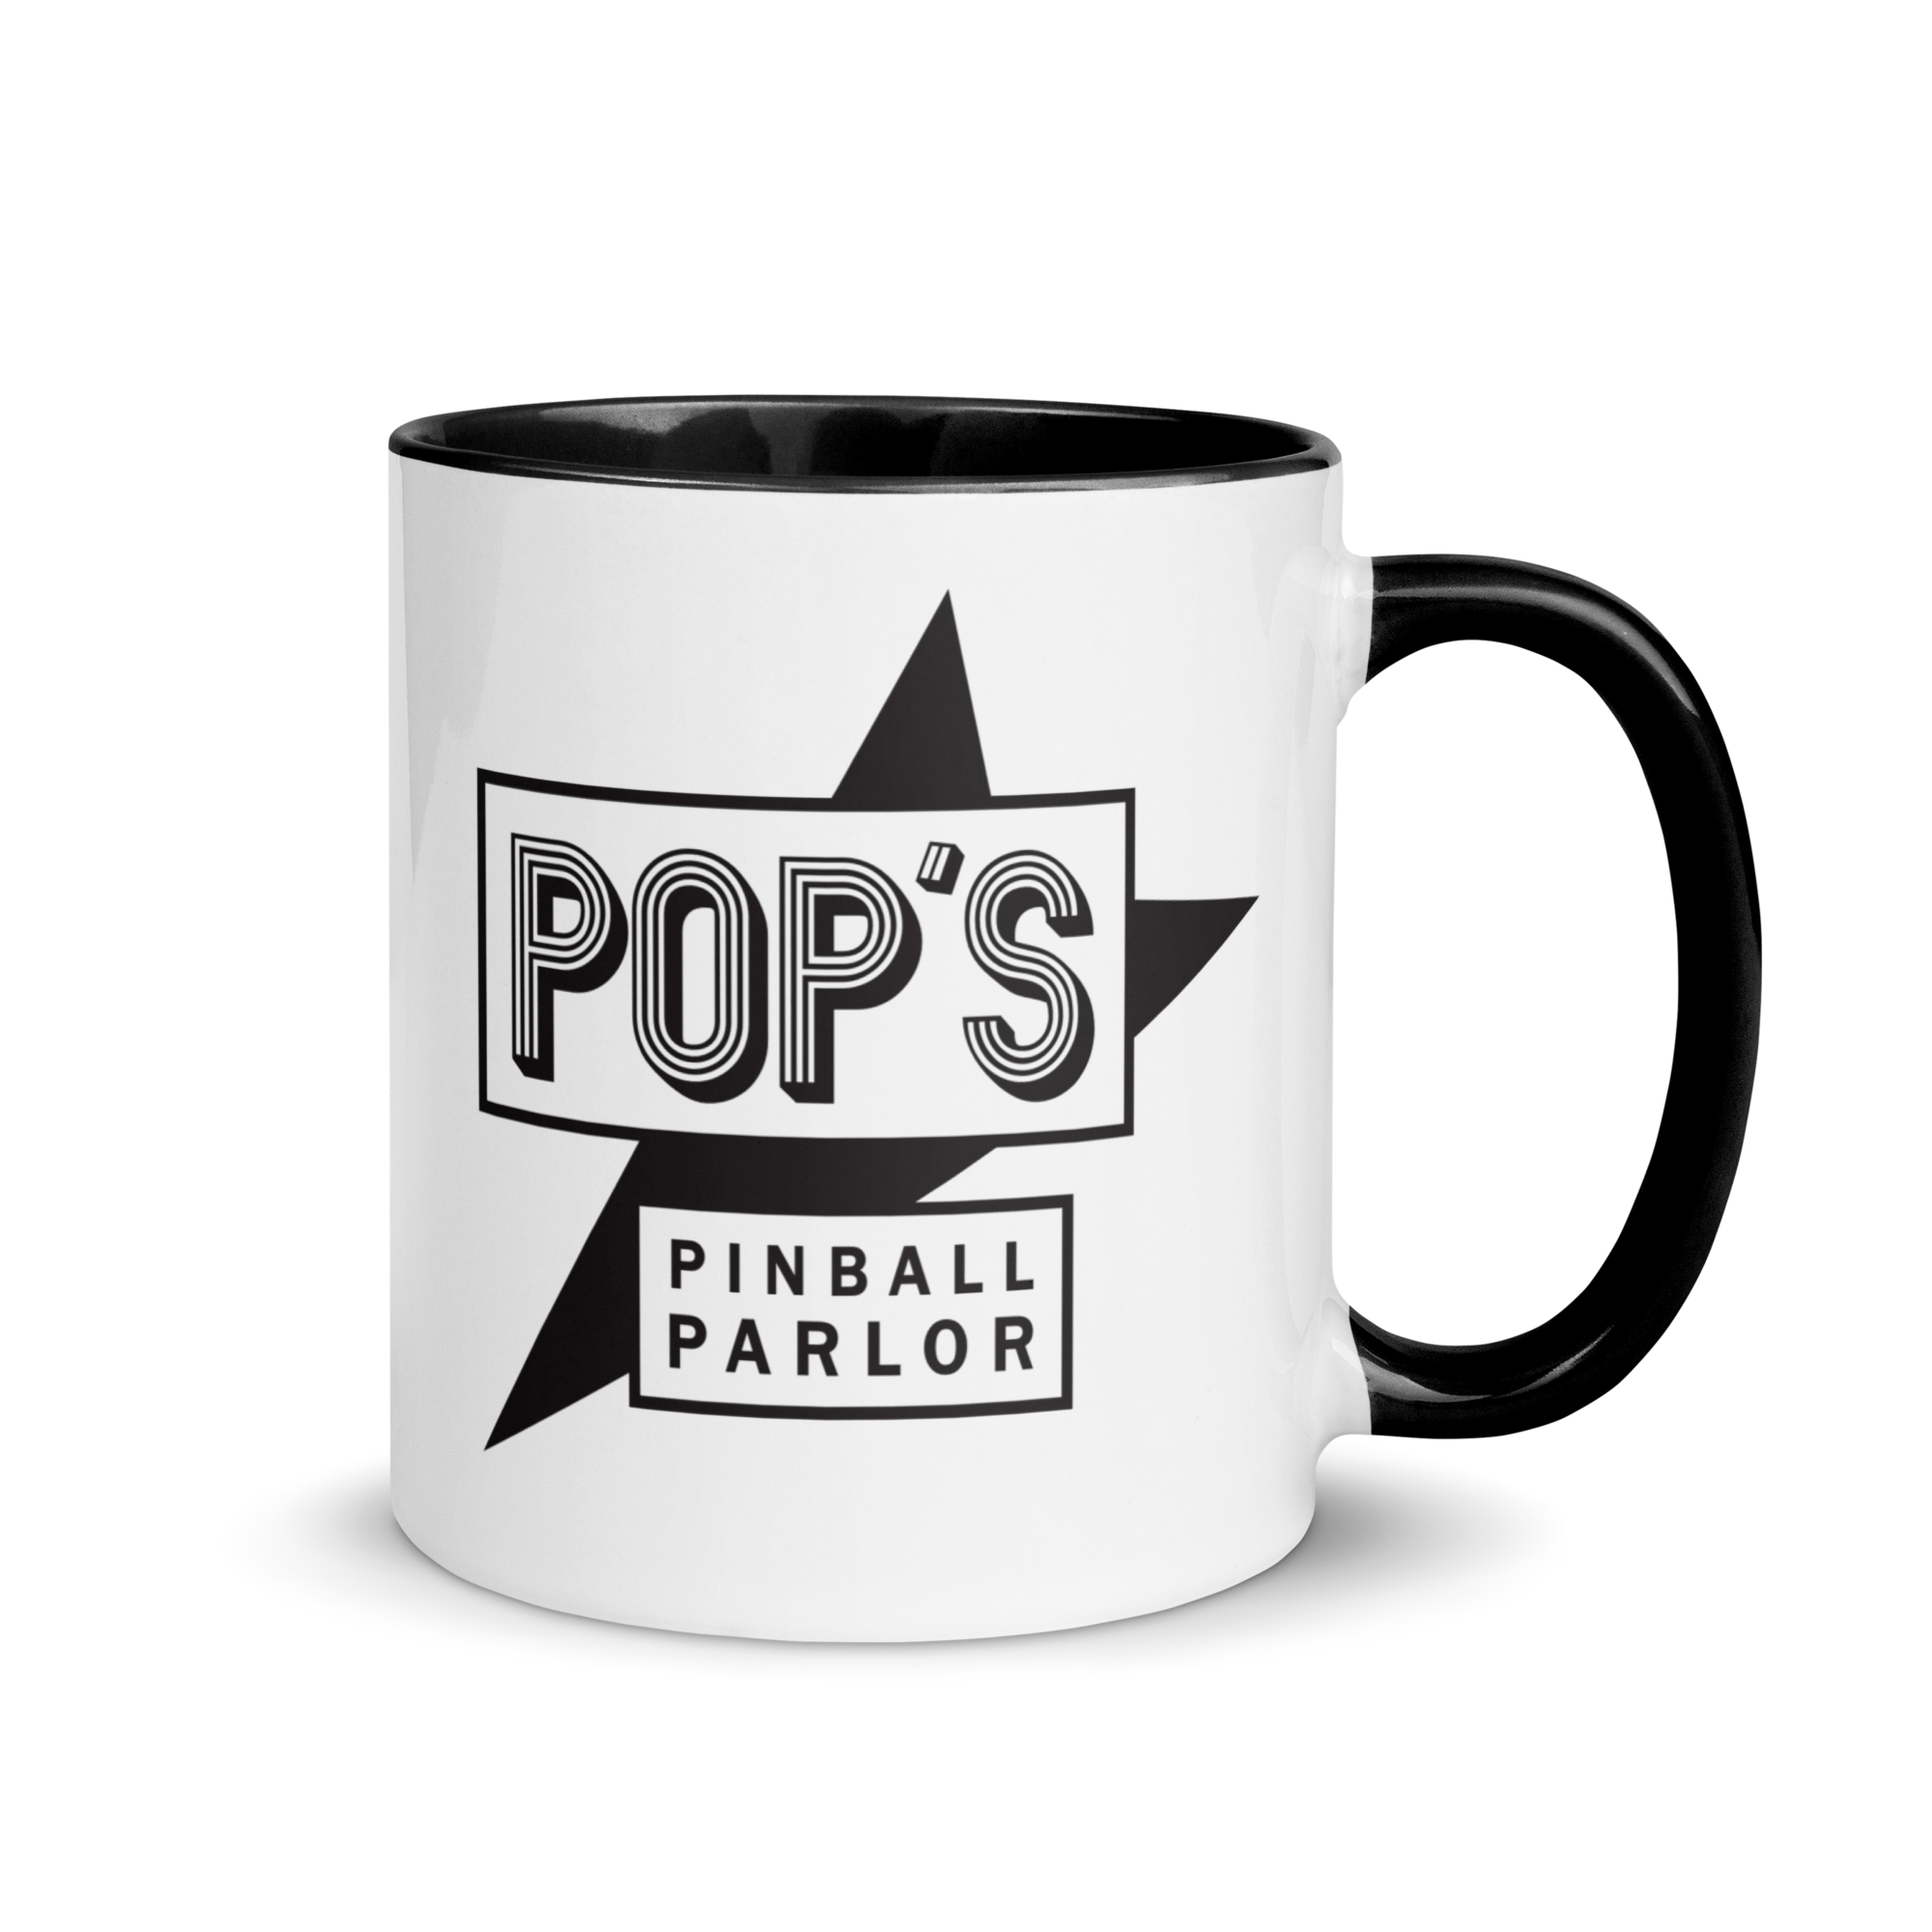 Pop's Pinball Parlor - Mug